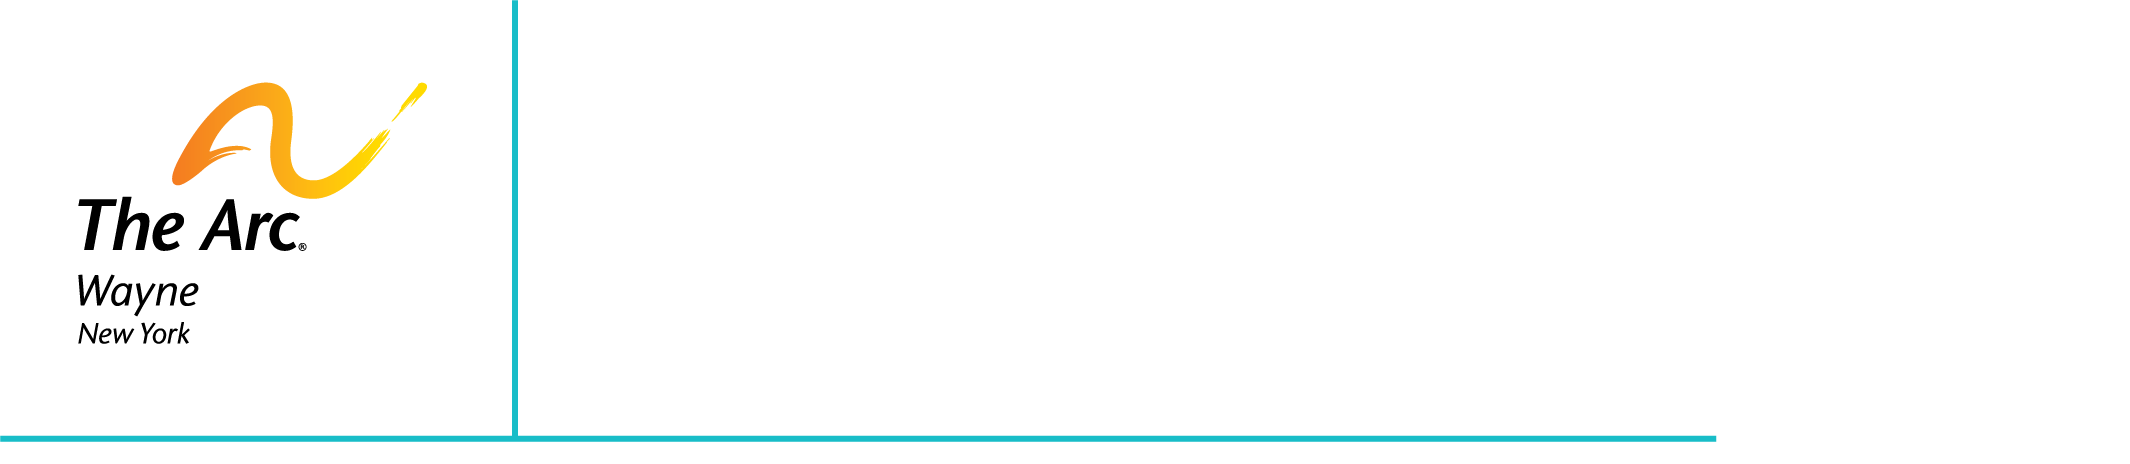 ARC ESL Shredding Service